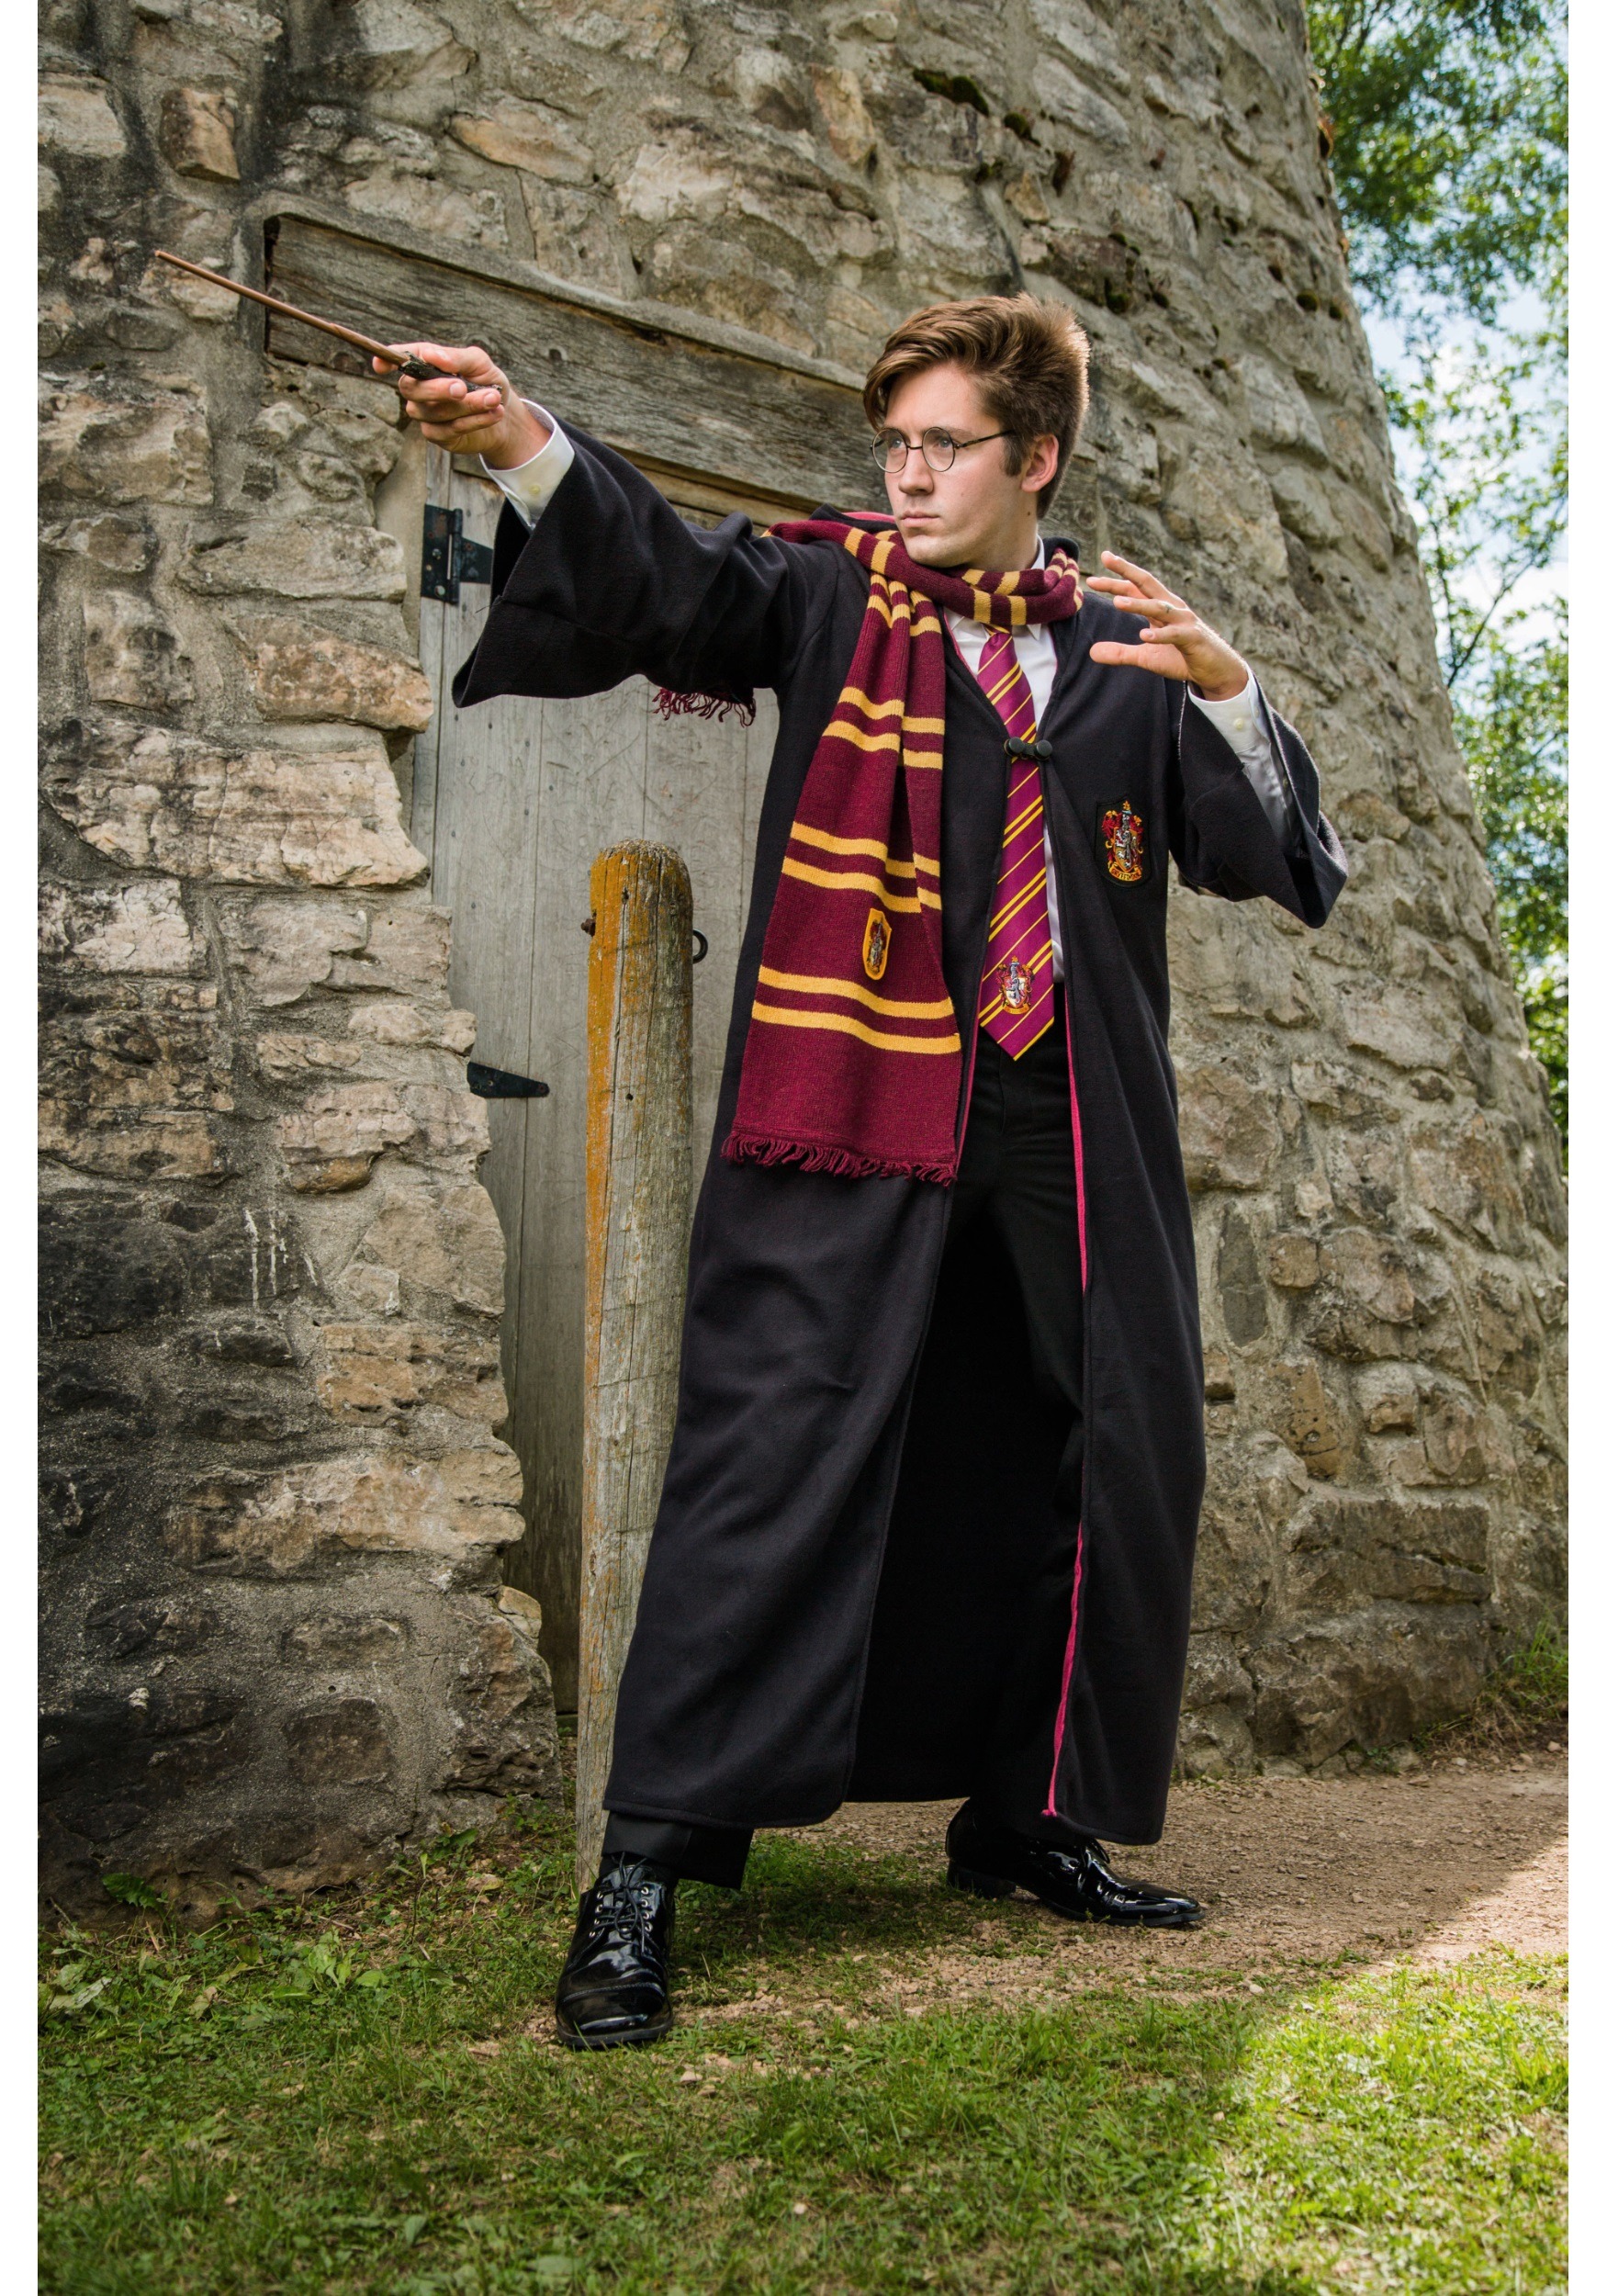 A Harry Potter Costume